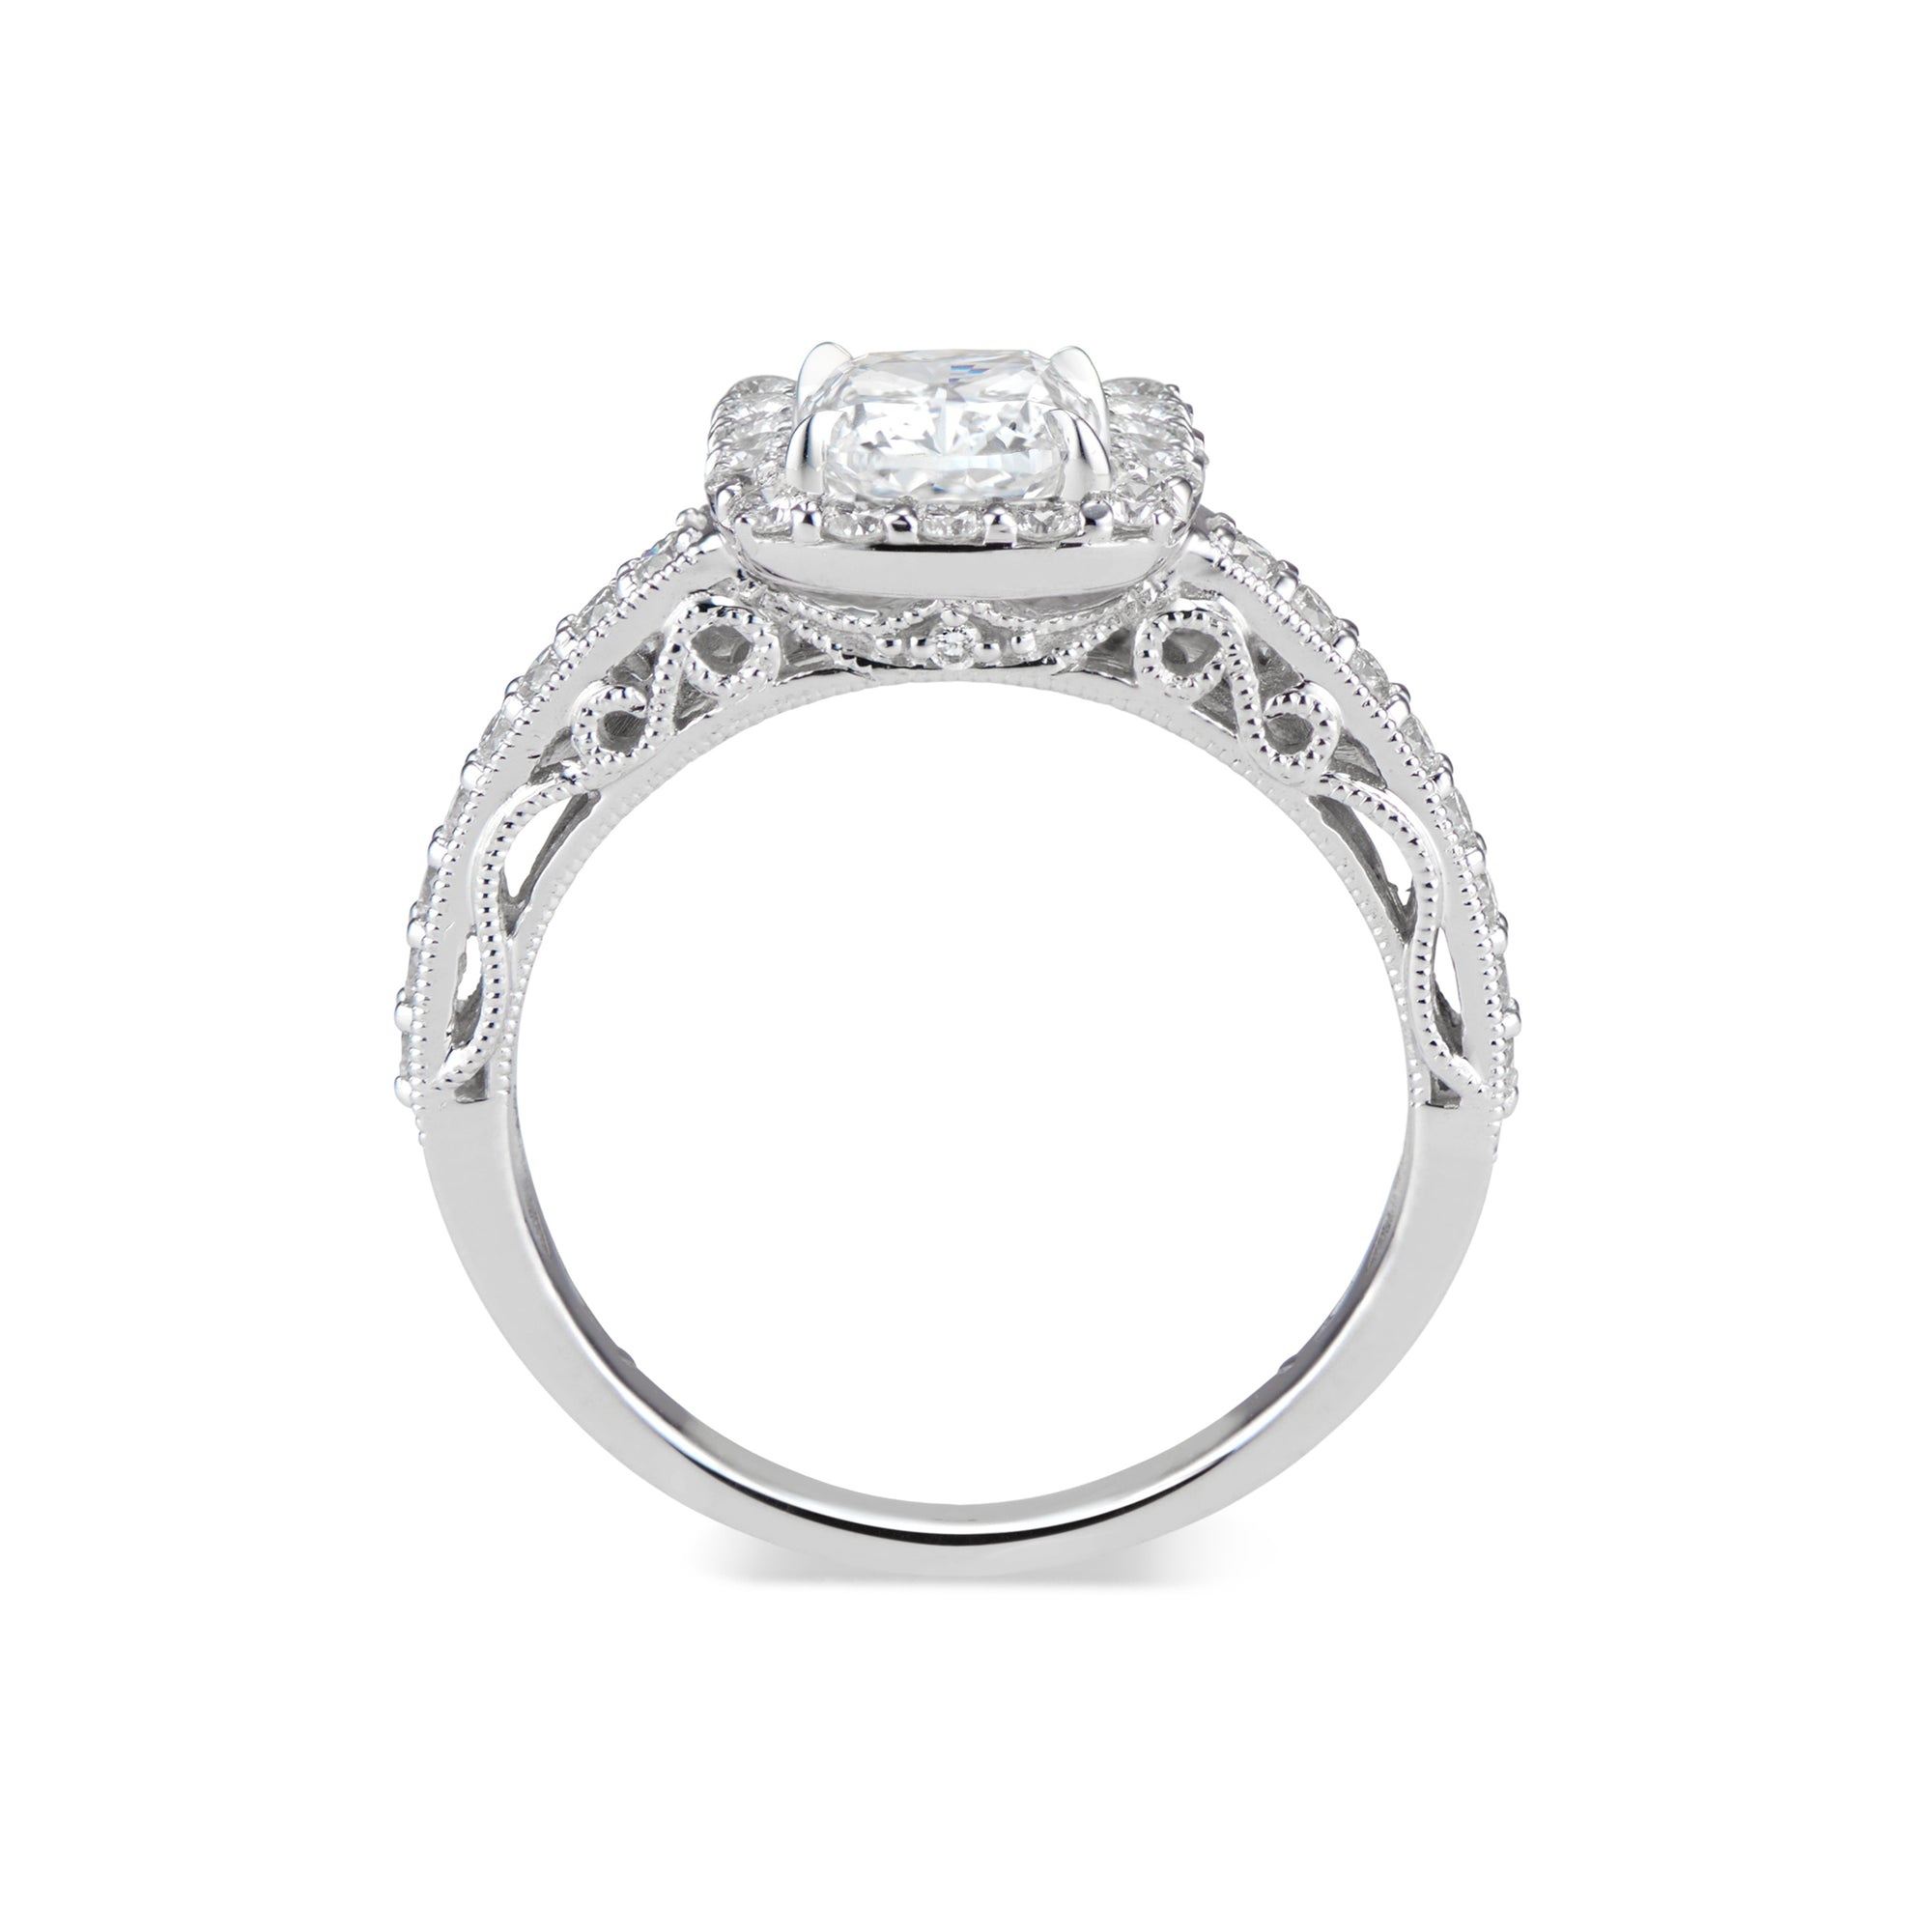 Cushion Halo Diamond Engagement Ring with Milgrain  - 18K weighting 3.18 GR  - 34 round diamonds totaling 0.47 carats